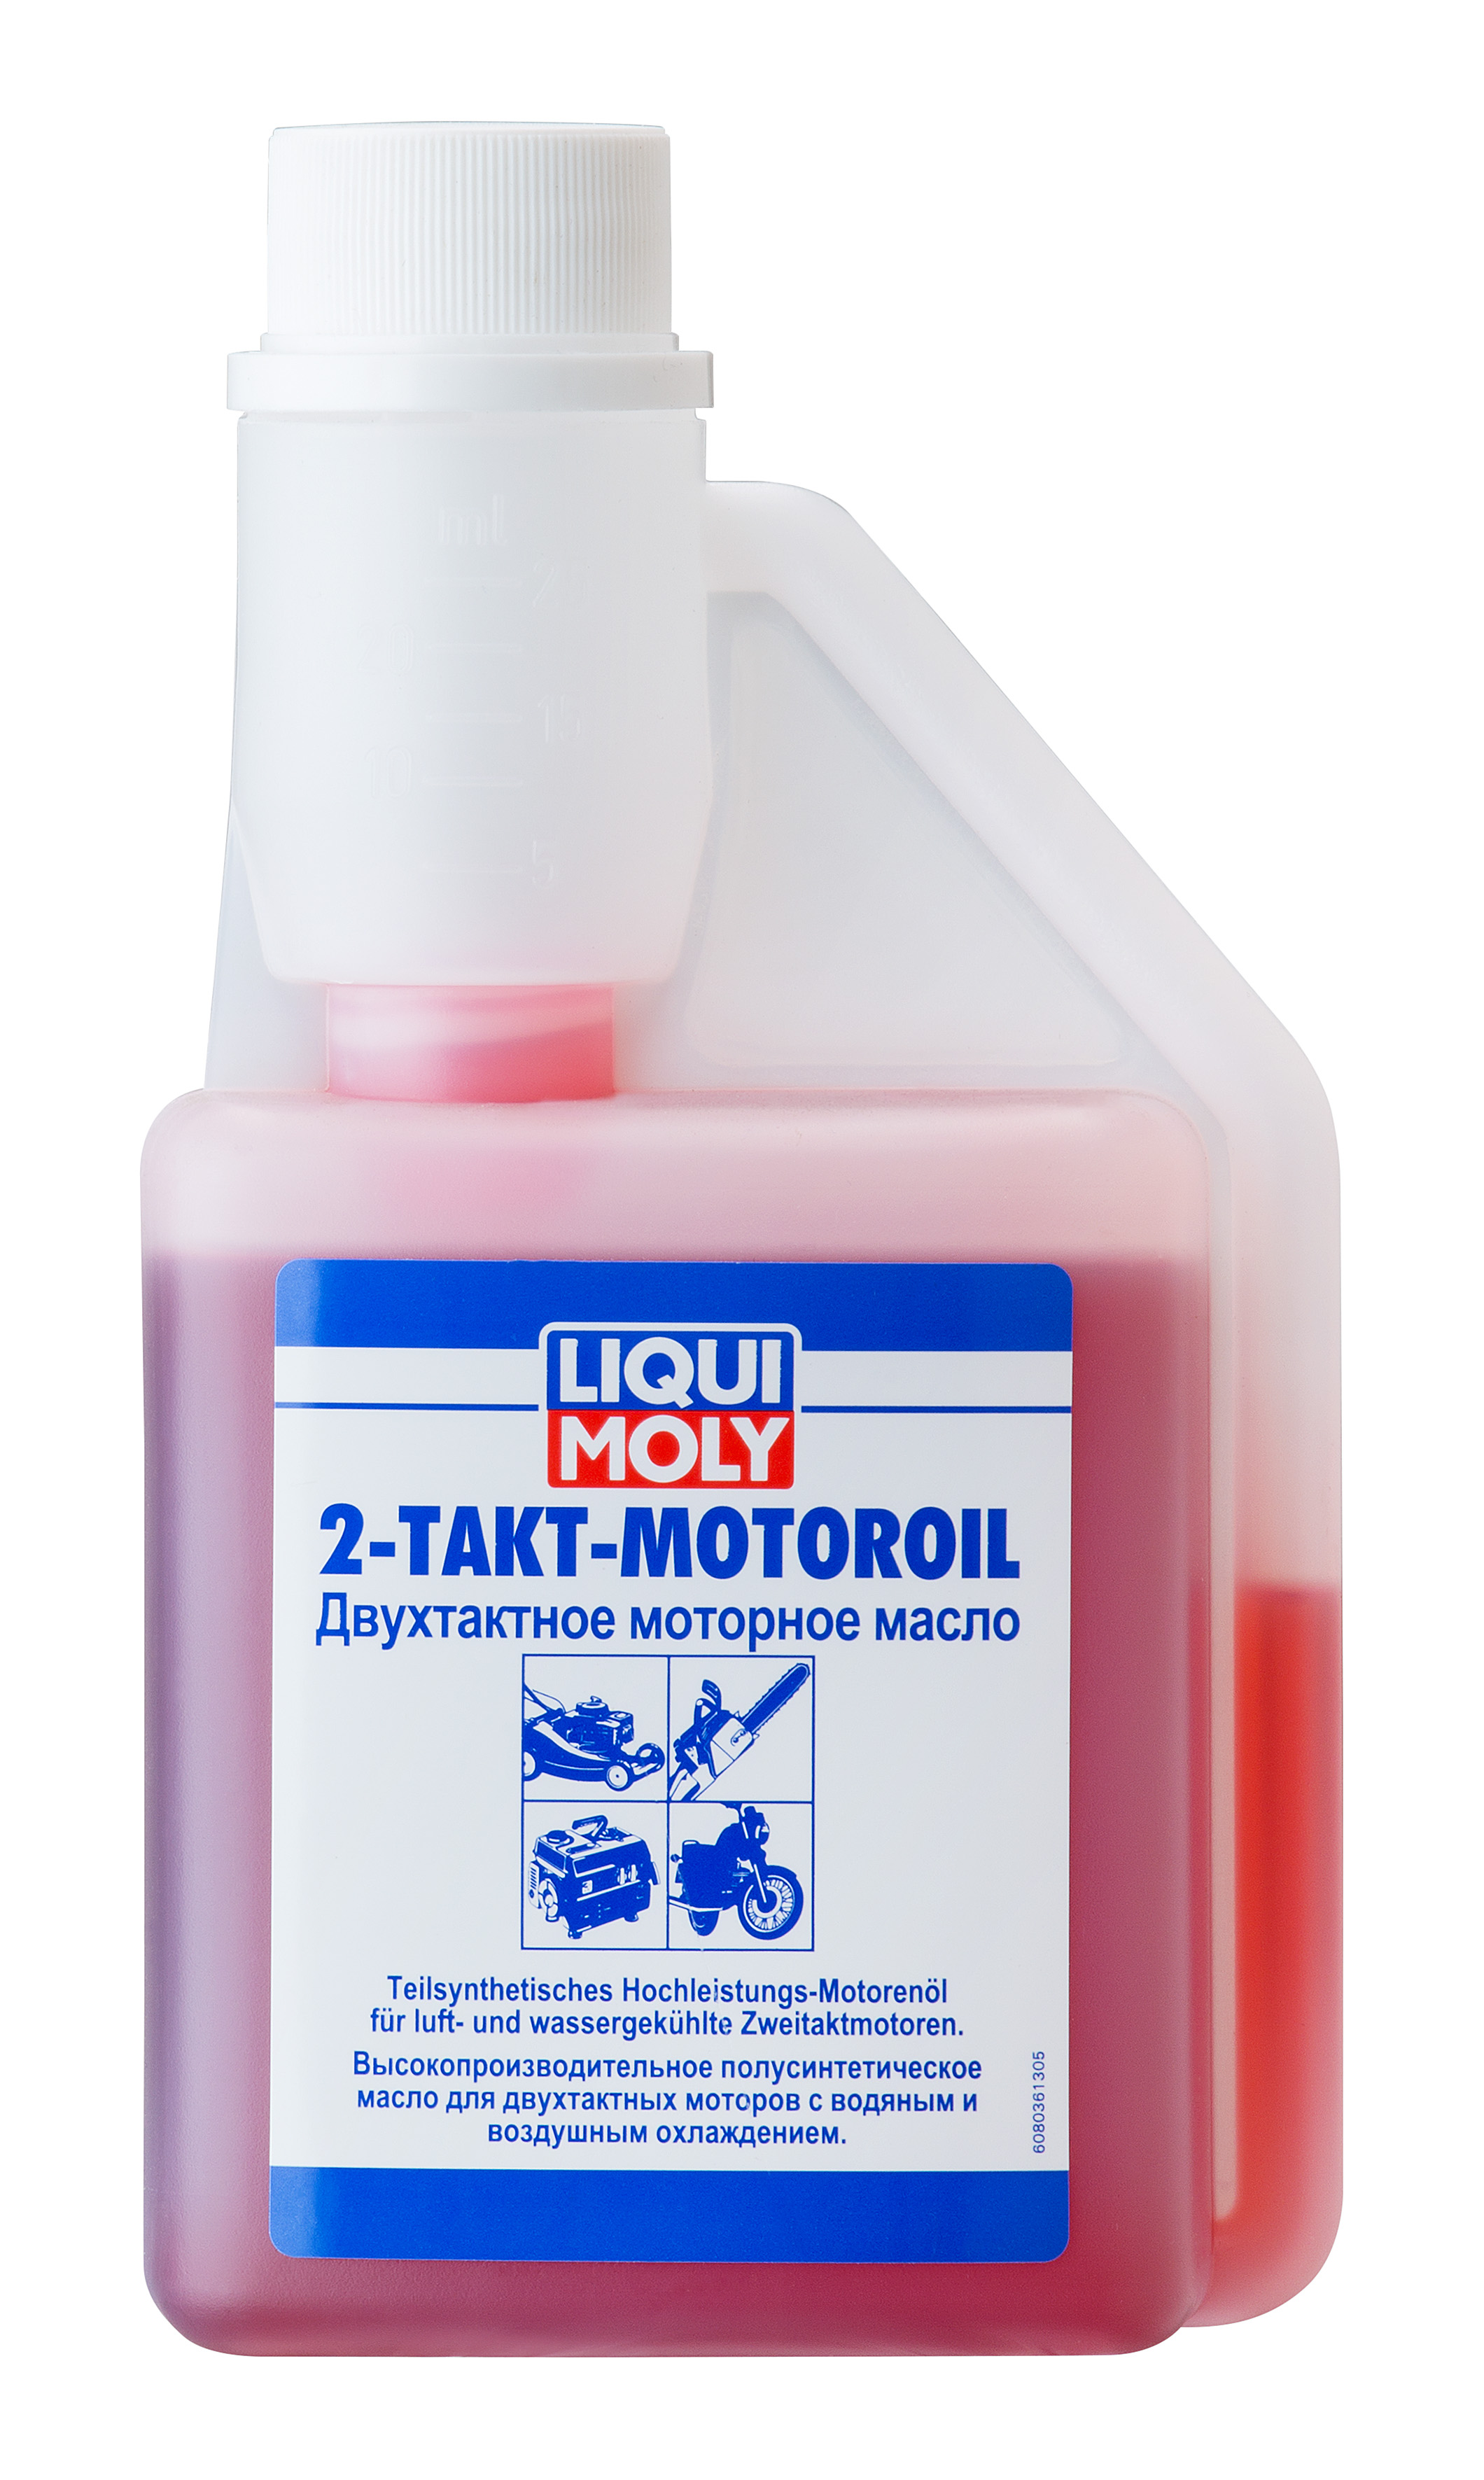 2-Takt-Motoroil (0,25 литра)